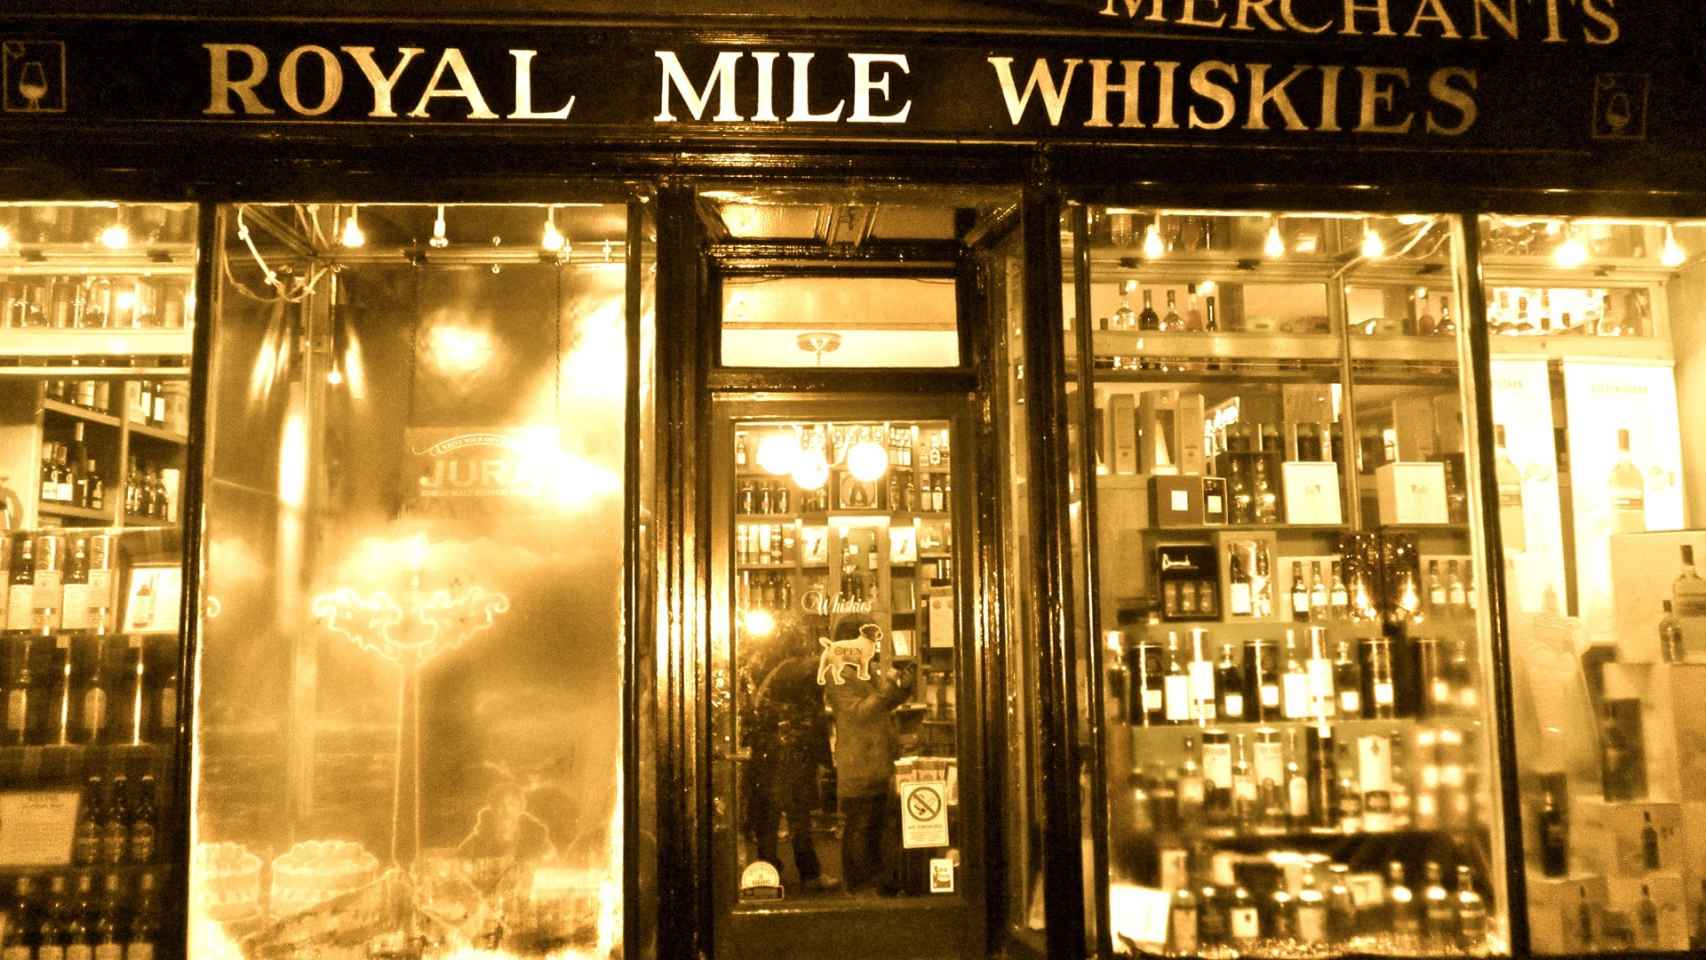 La emblemática Royal Mile Whisky.